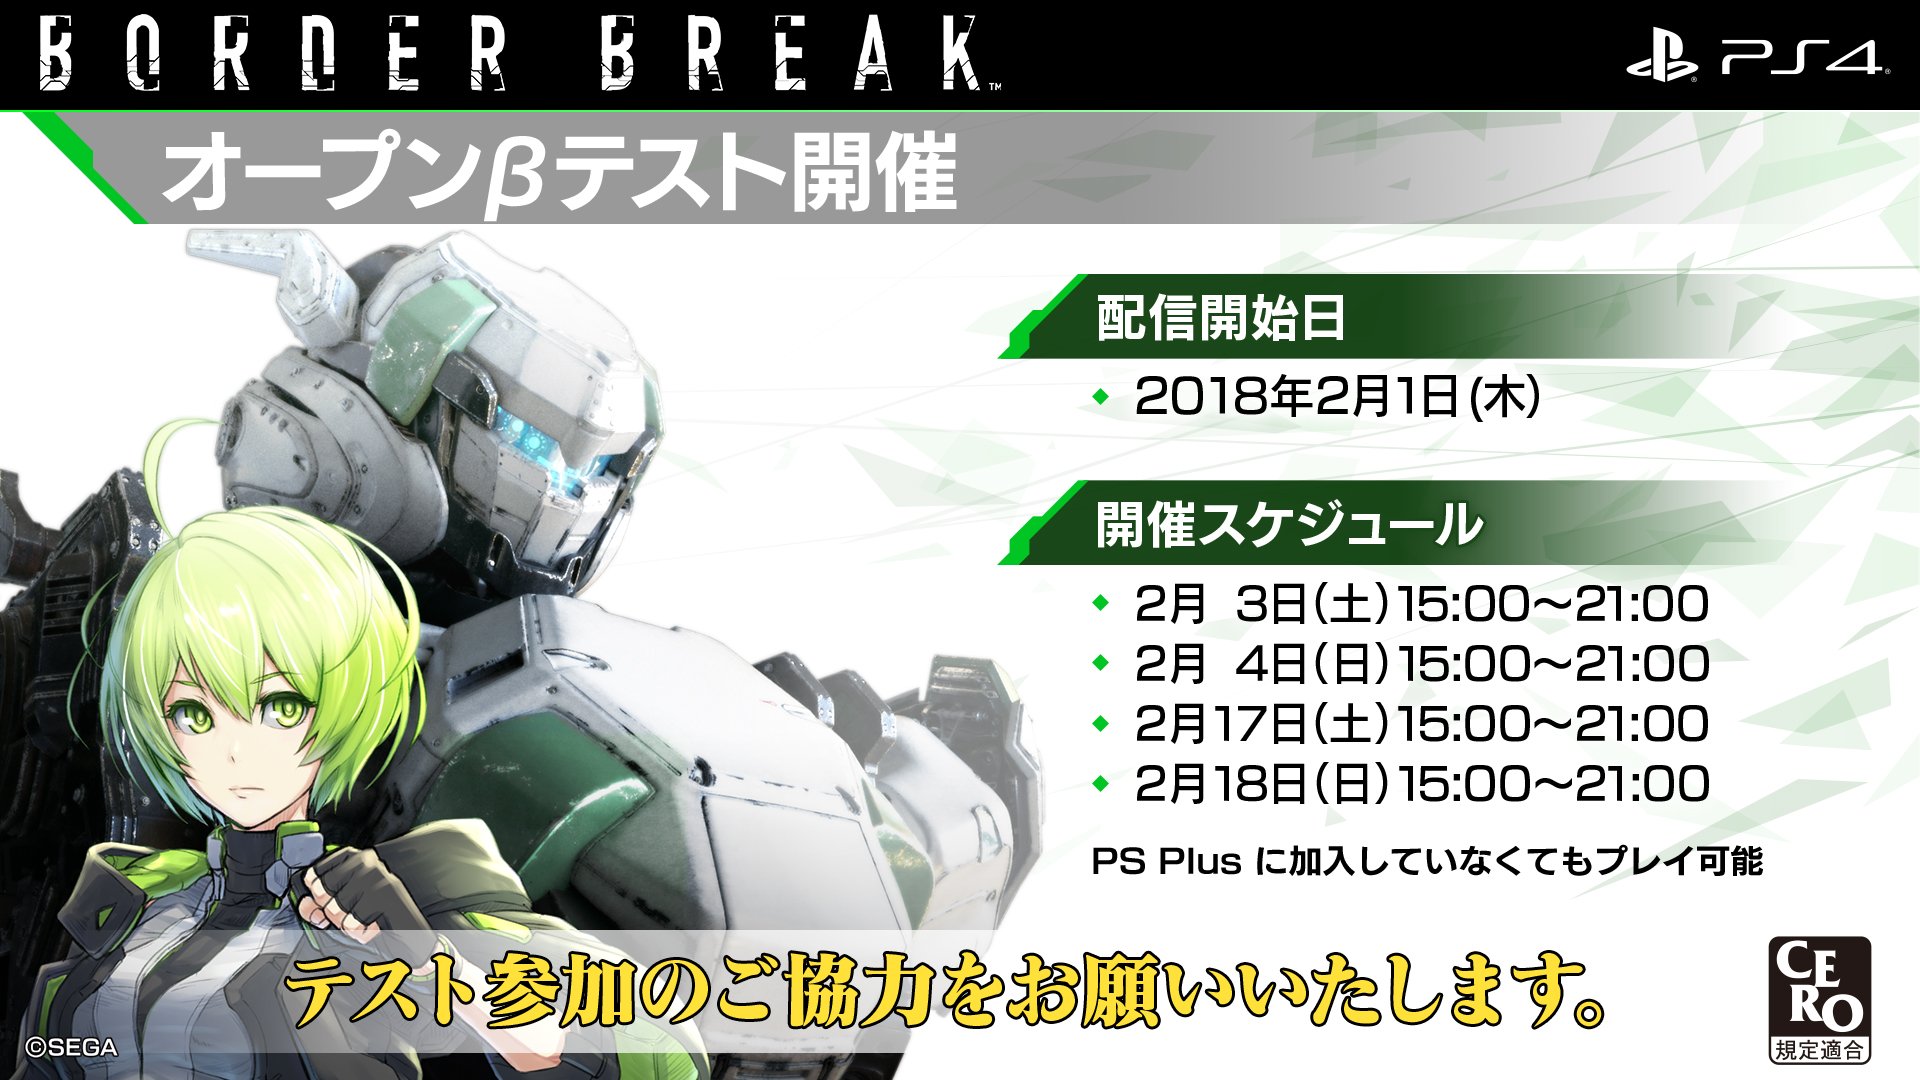 Border Break PS4 open beta schedule